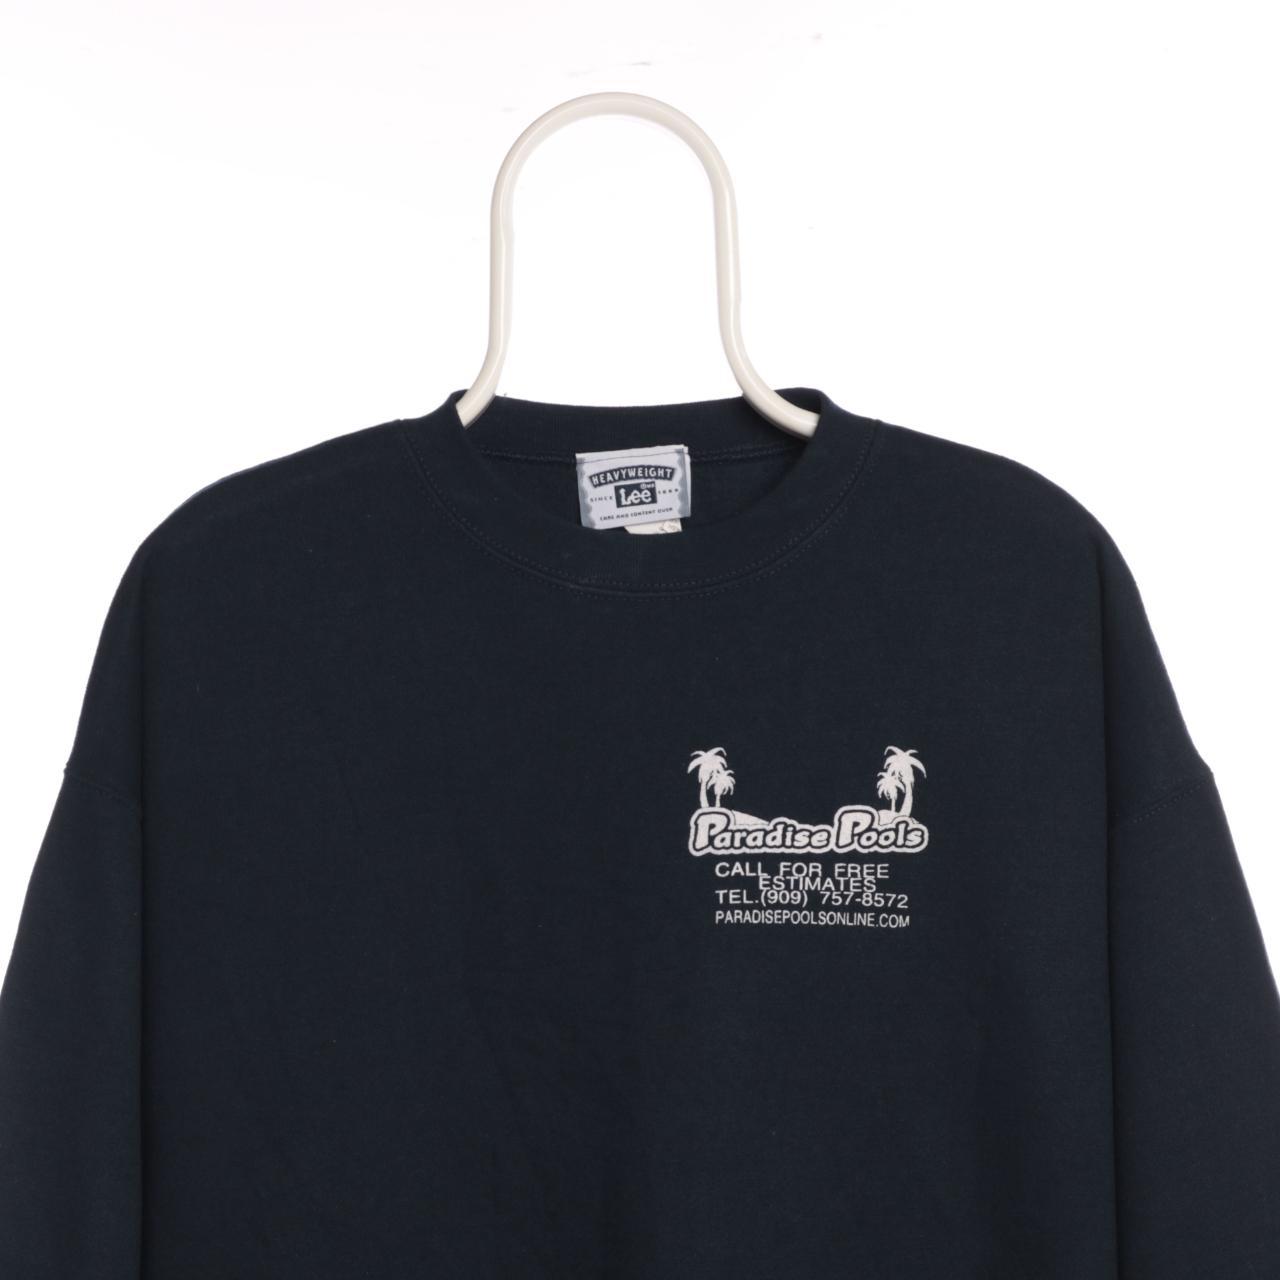 Product Image 3 - Vintage Lee Sweatshirt

Lee 90's Sweatshirt
Crewneck